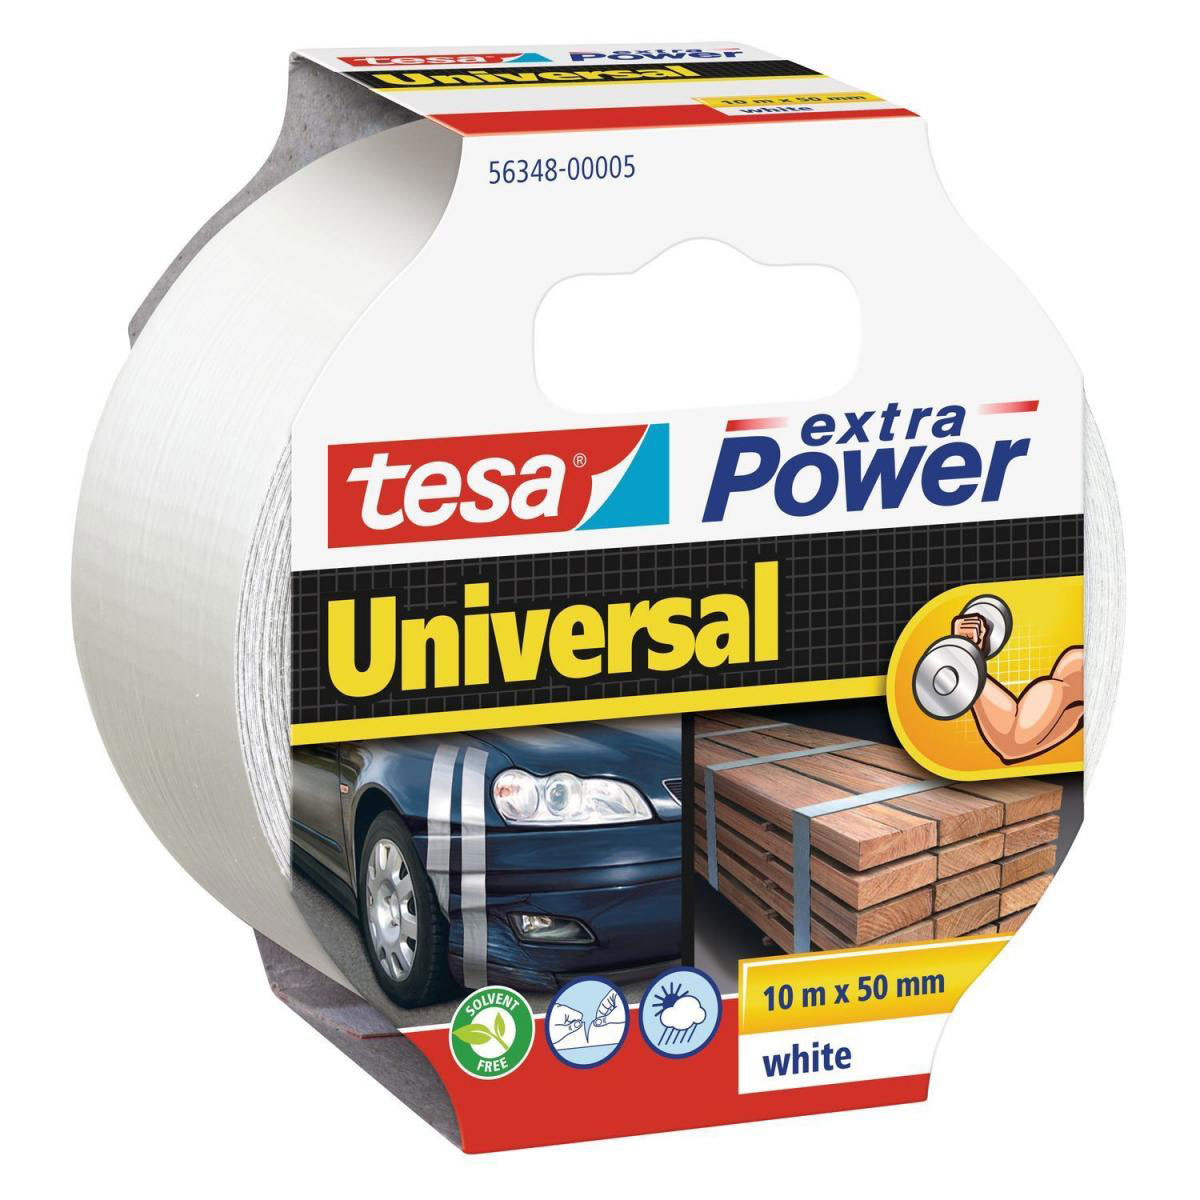 Tesa Extra Power Universal 10 m x 50 mm weiß